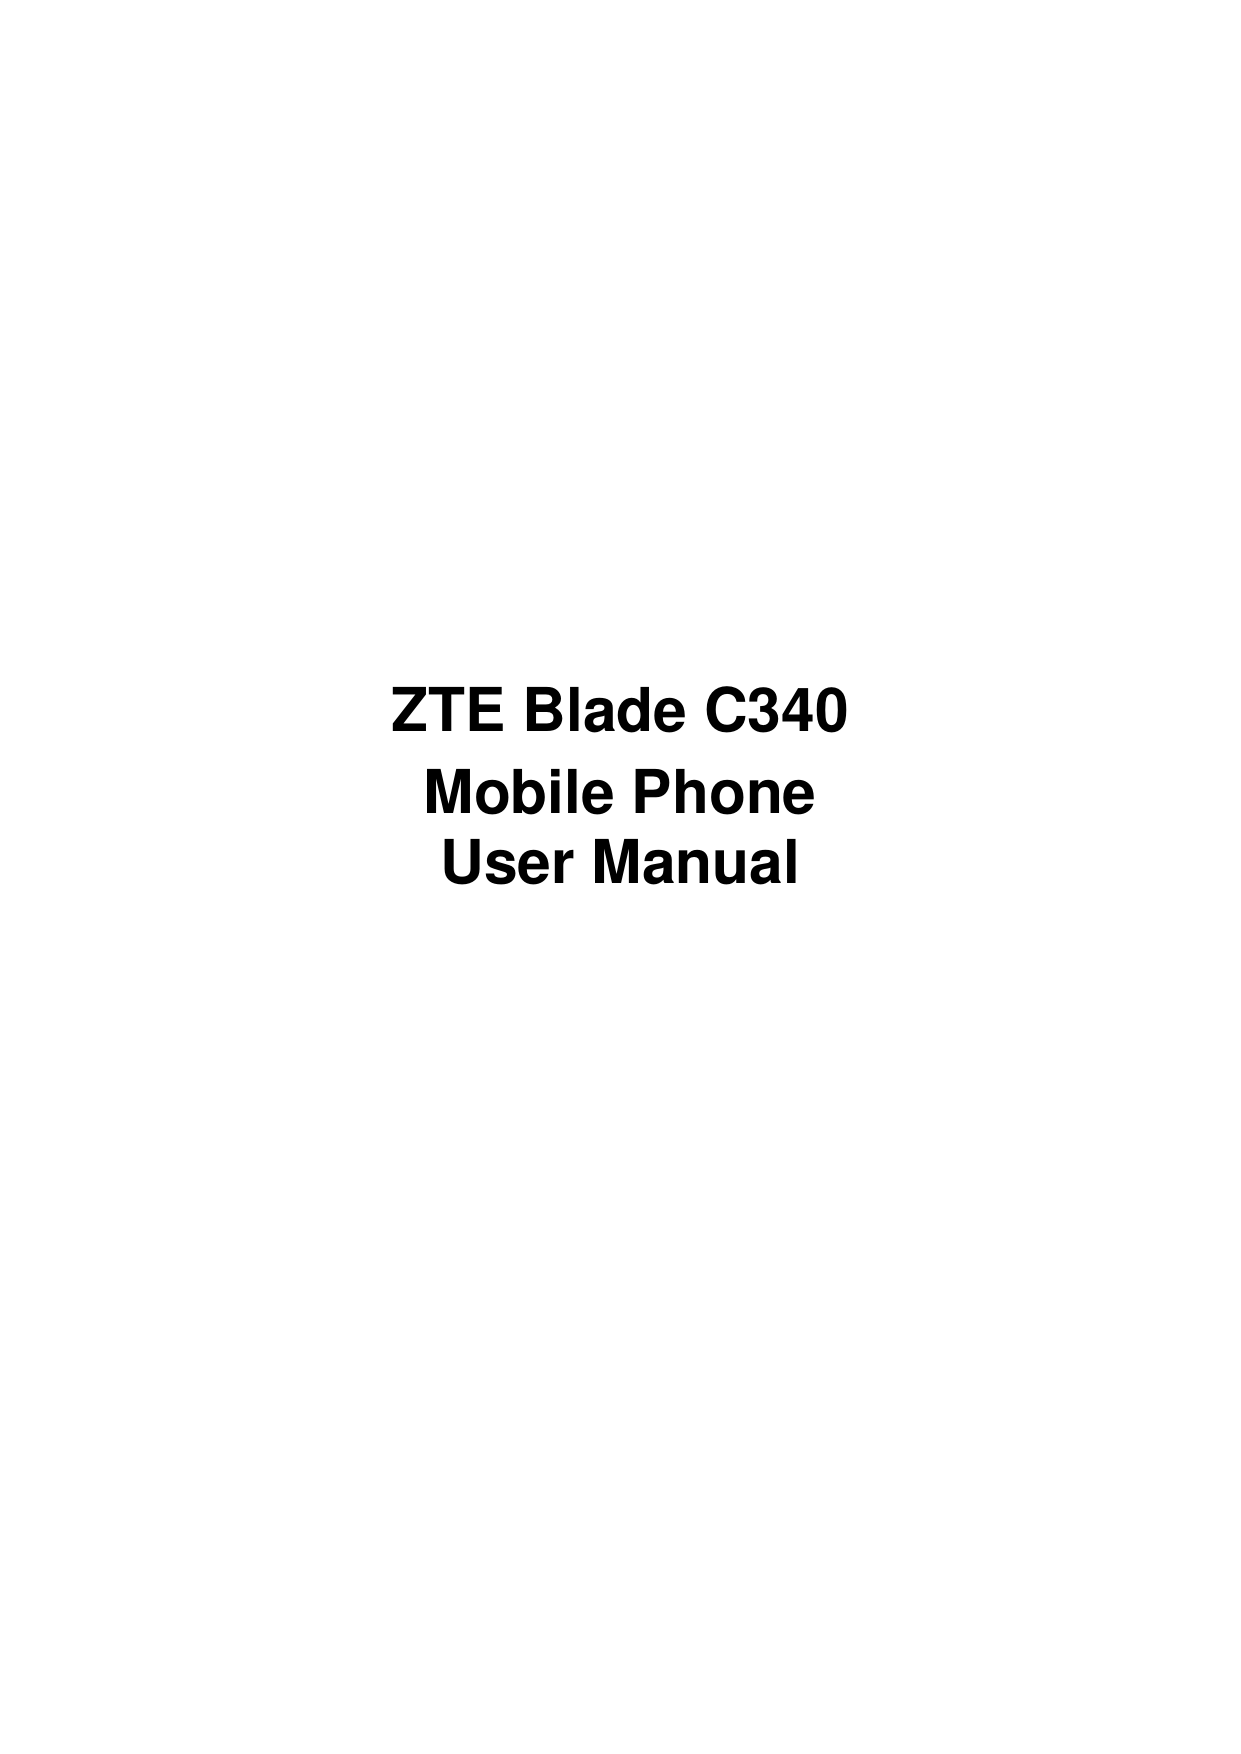      ZTE Blade C340 Mobile Phone   User Manual                              